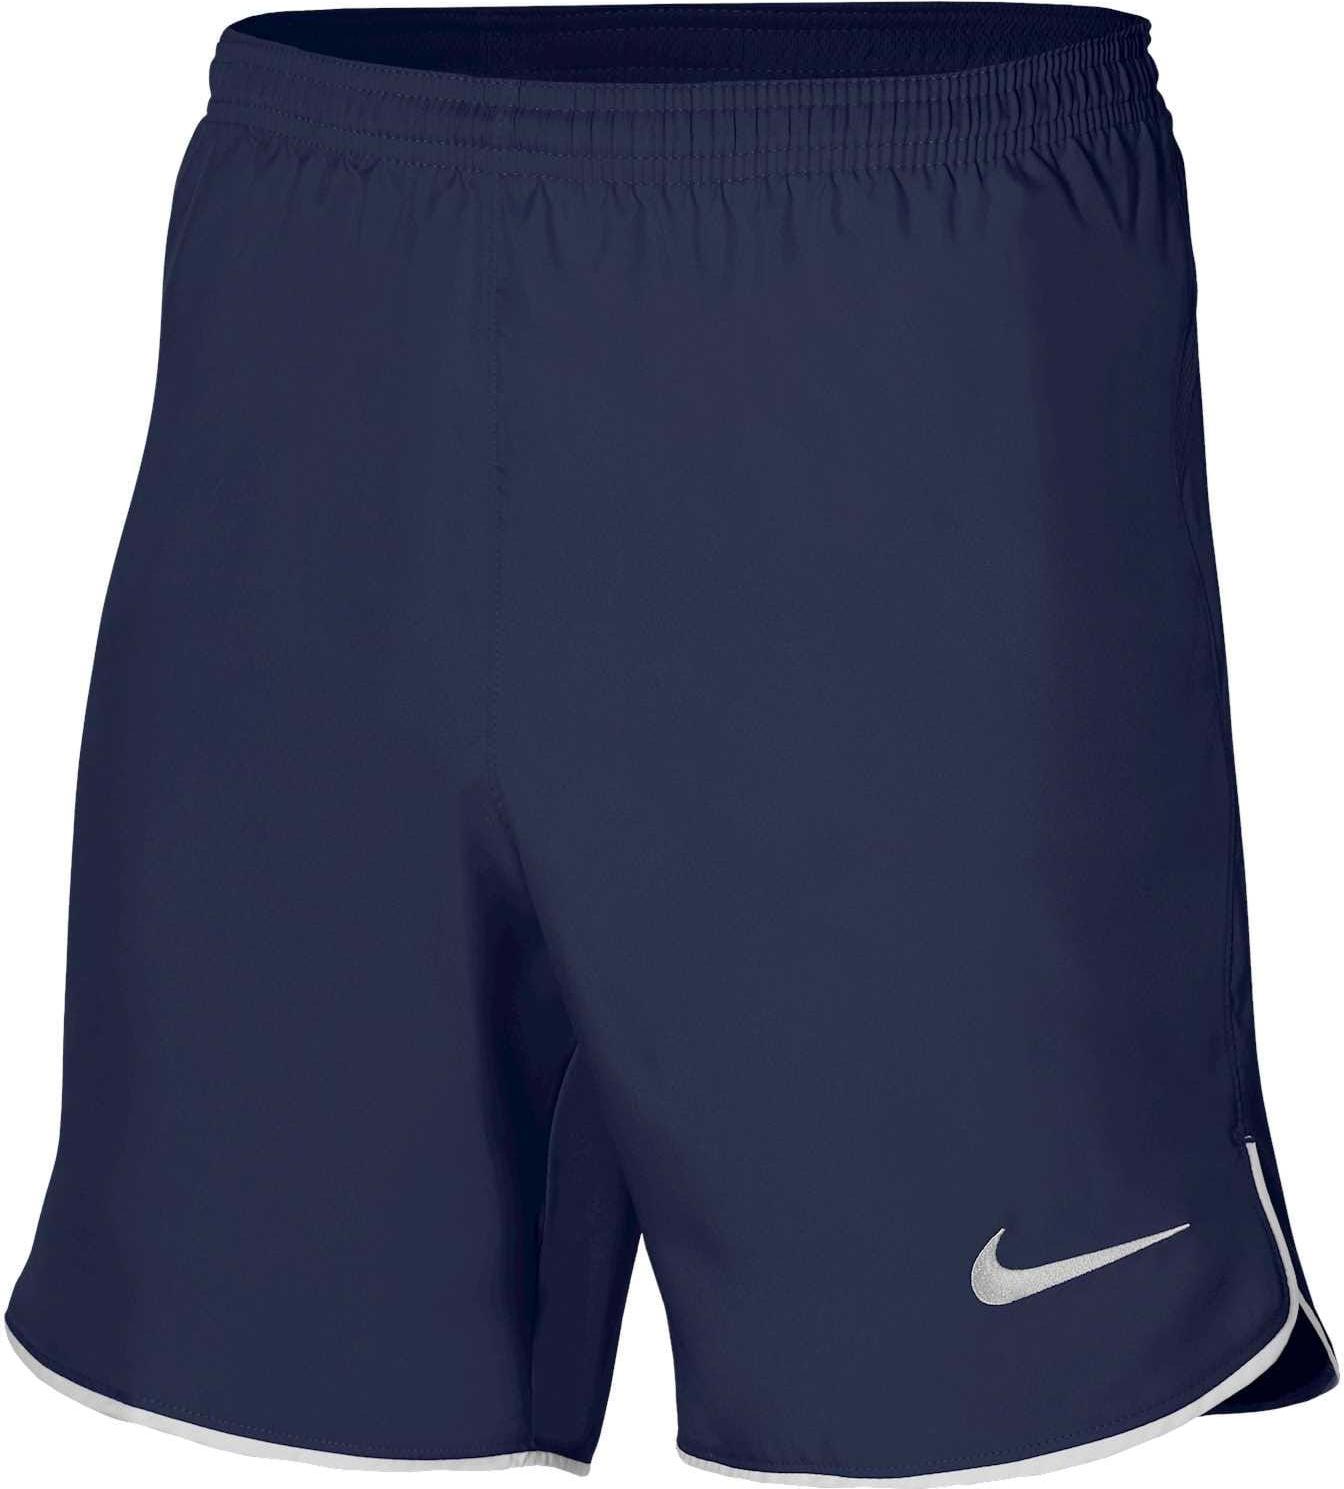 Shorts Nike Laser V Woven